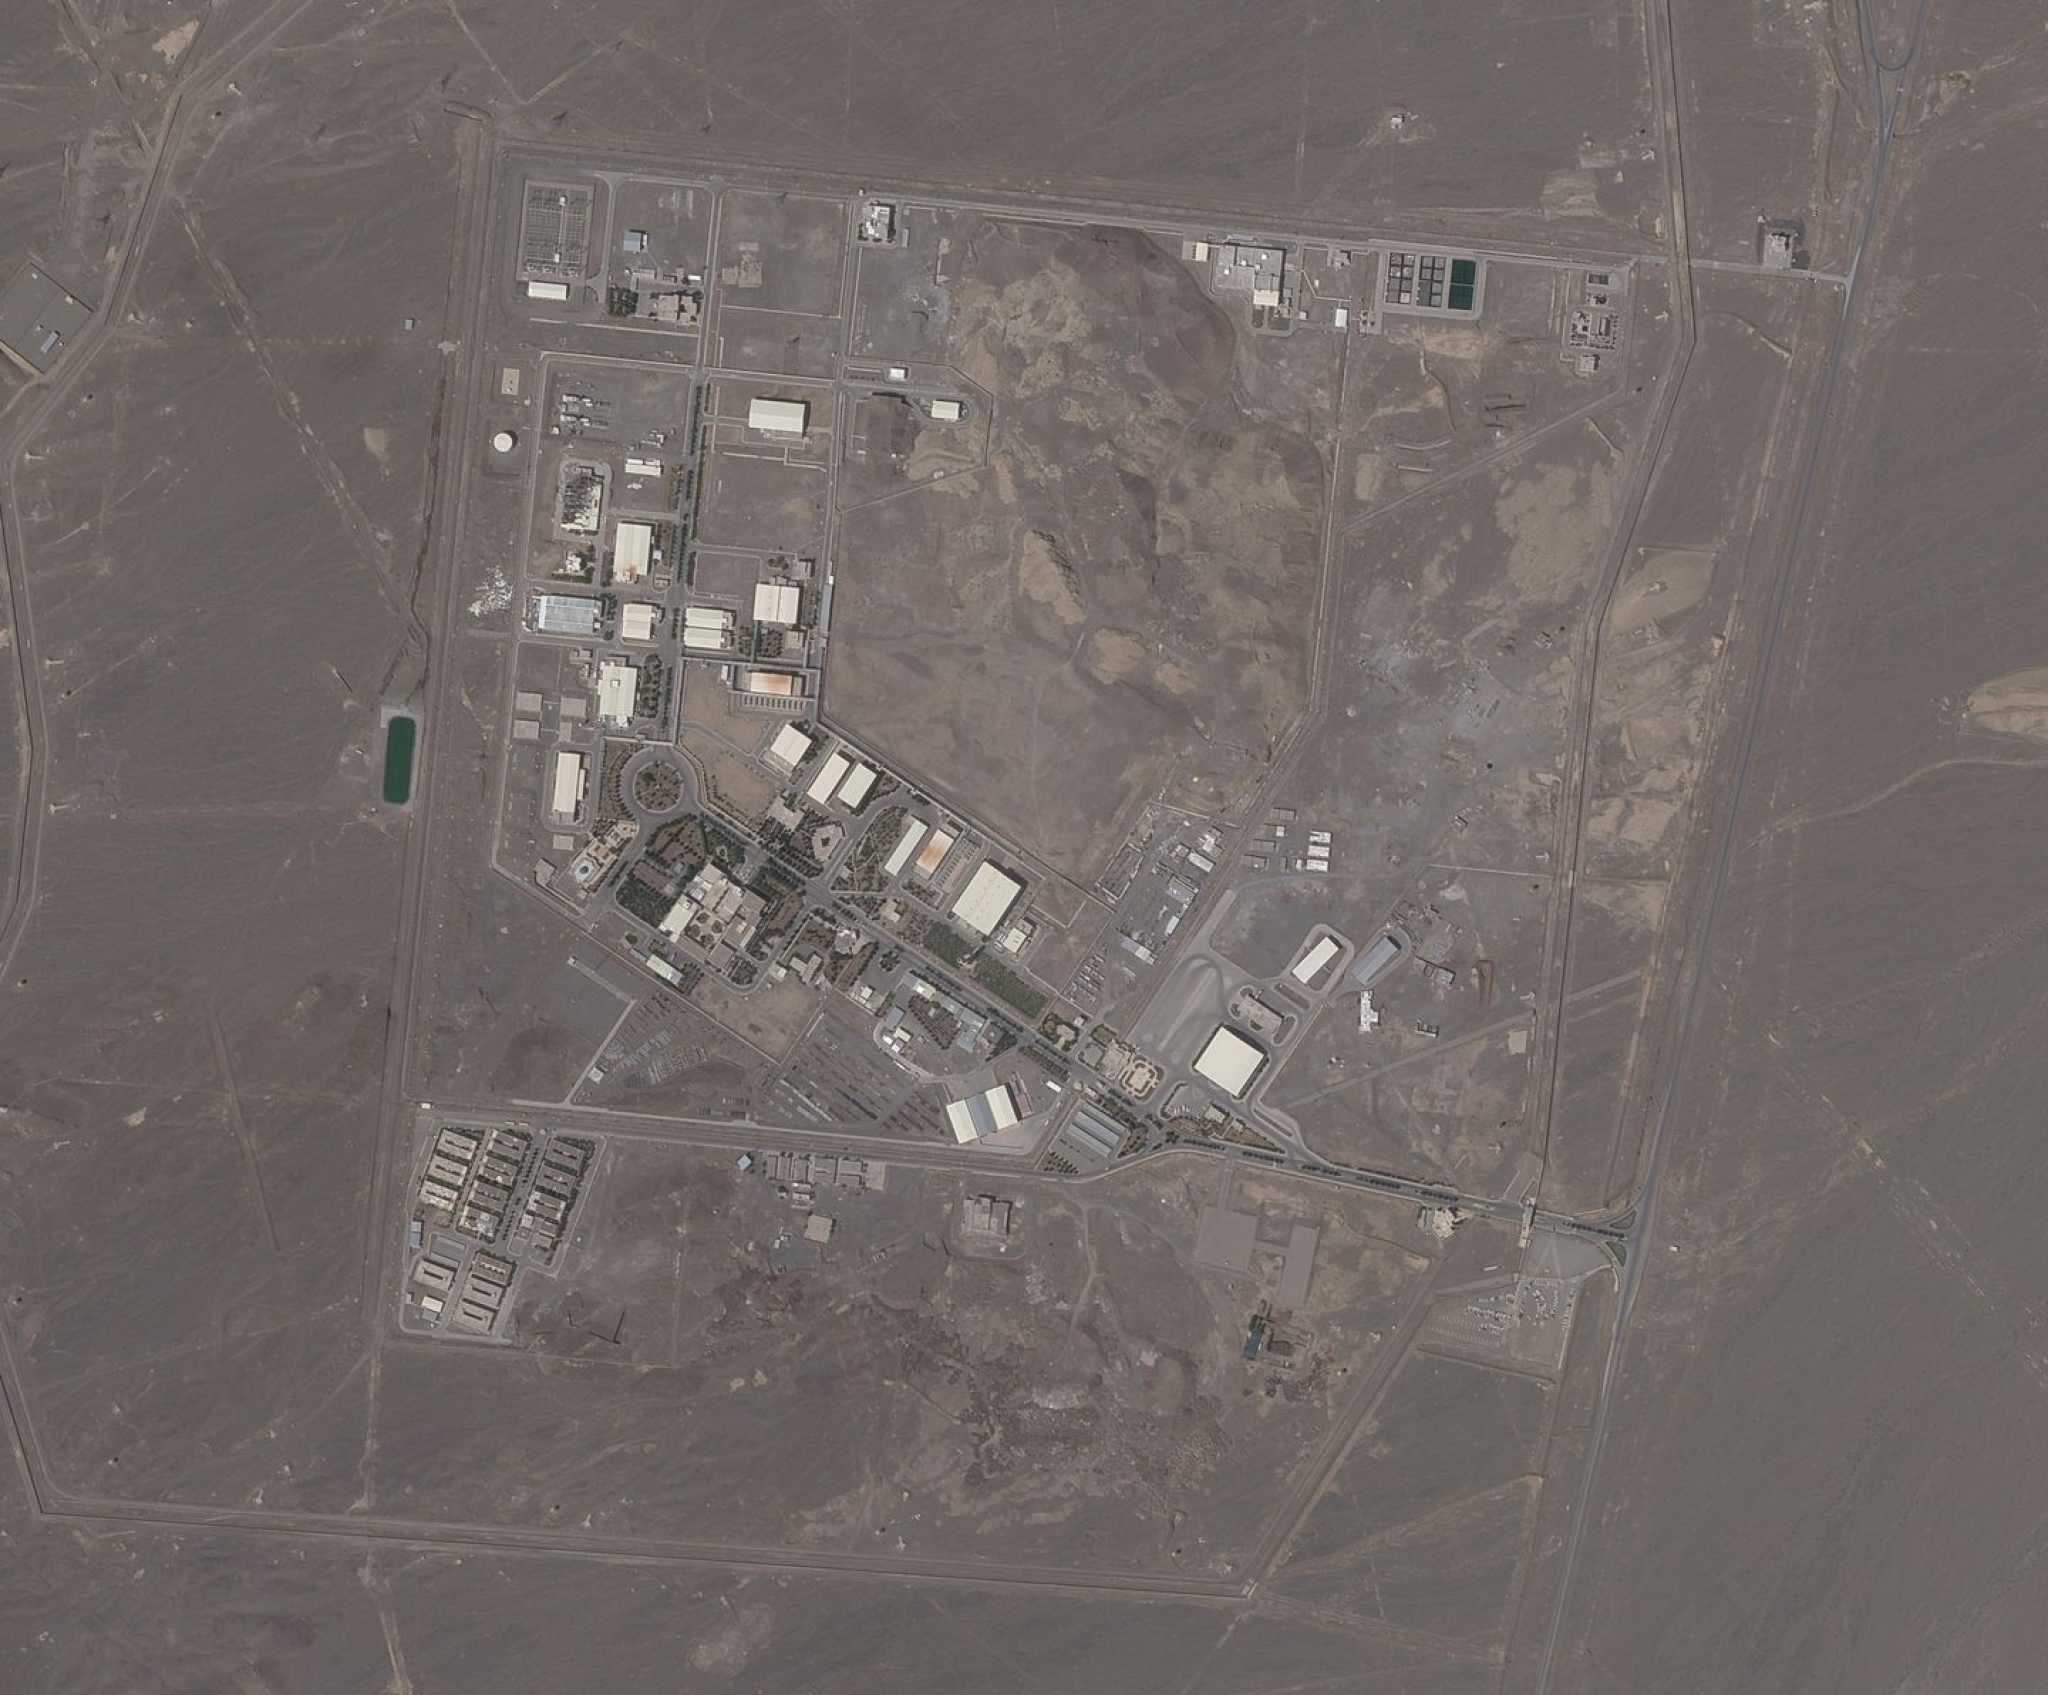 Iran starts enriching uranium at 60%, its highest level ever